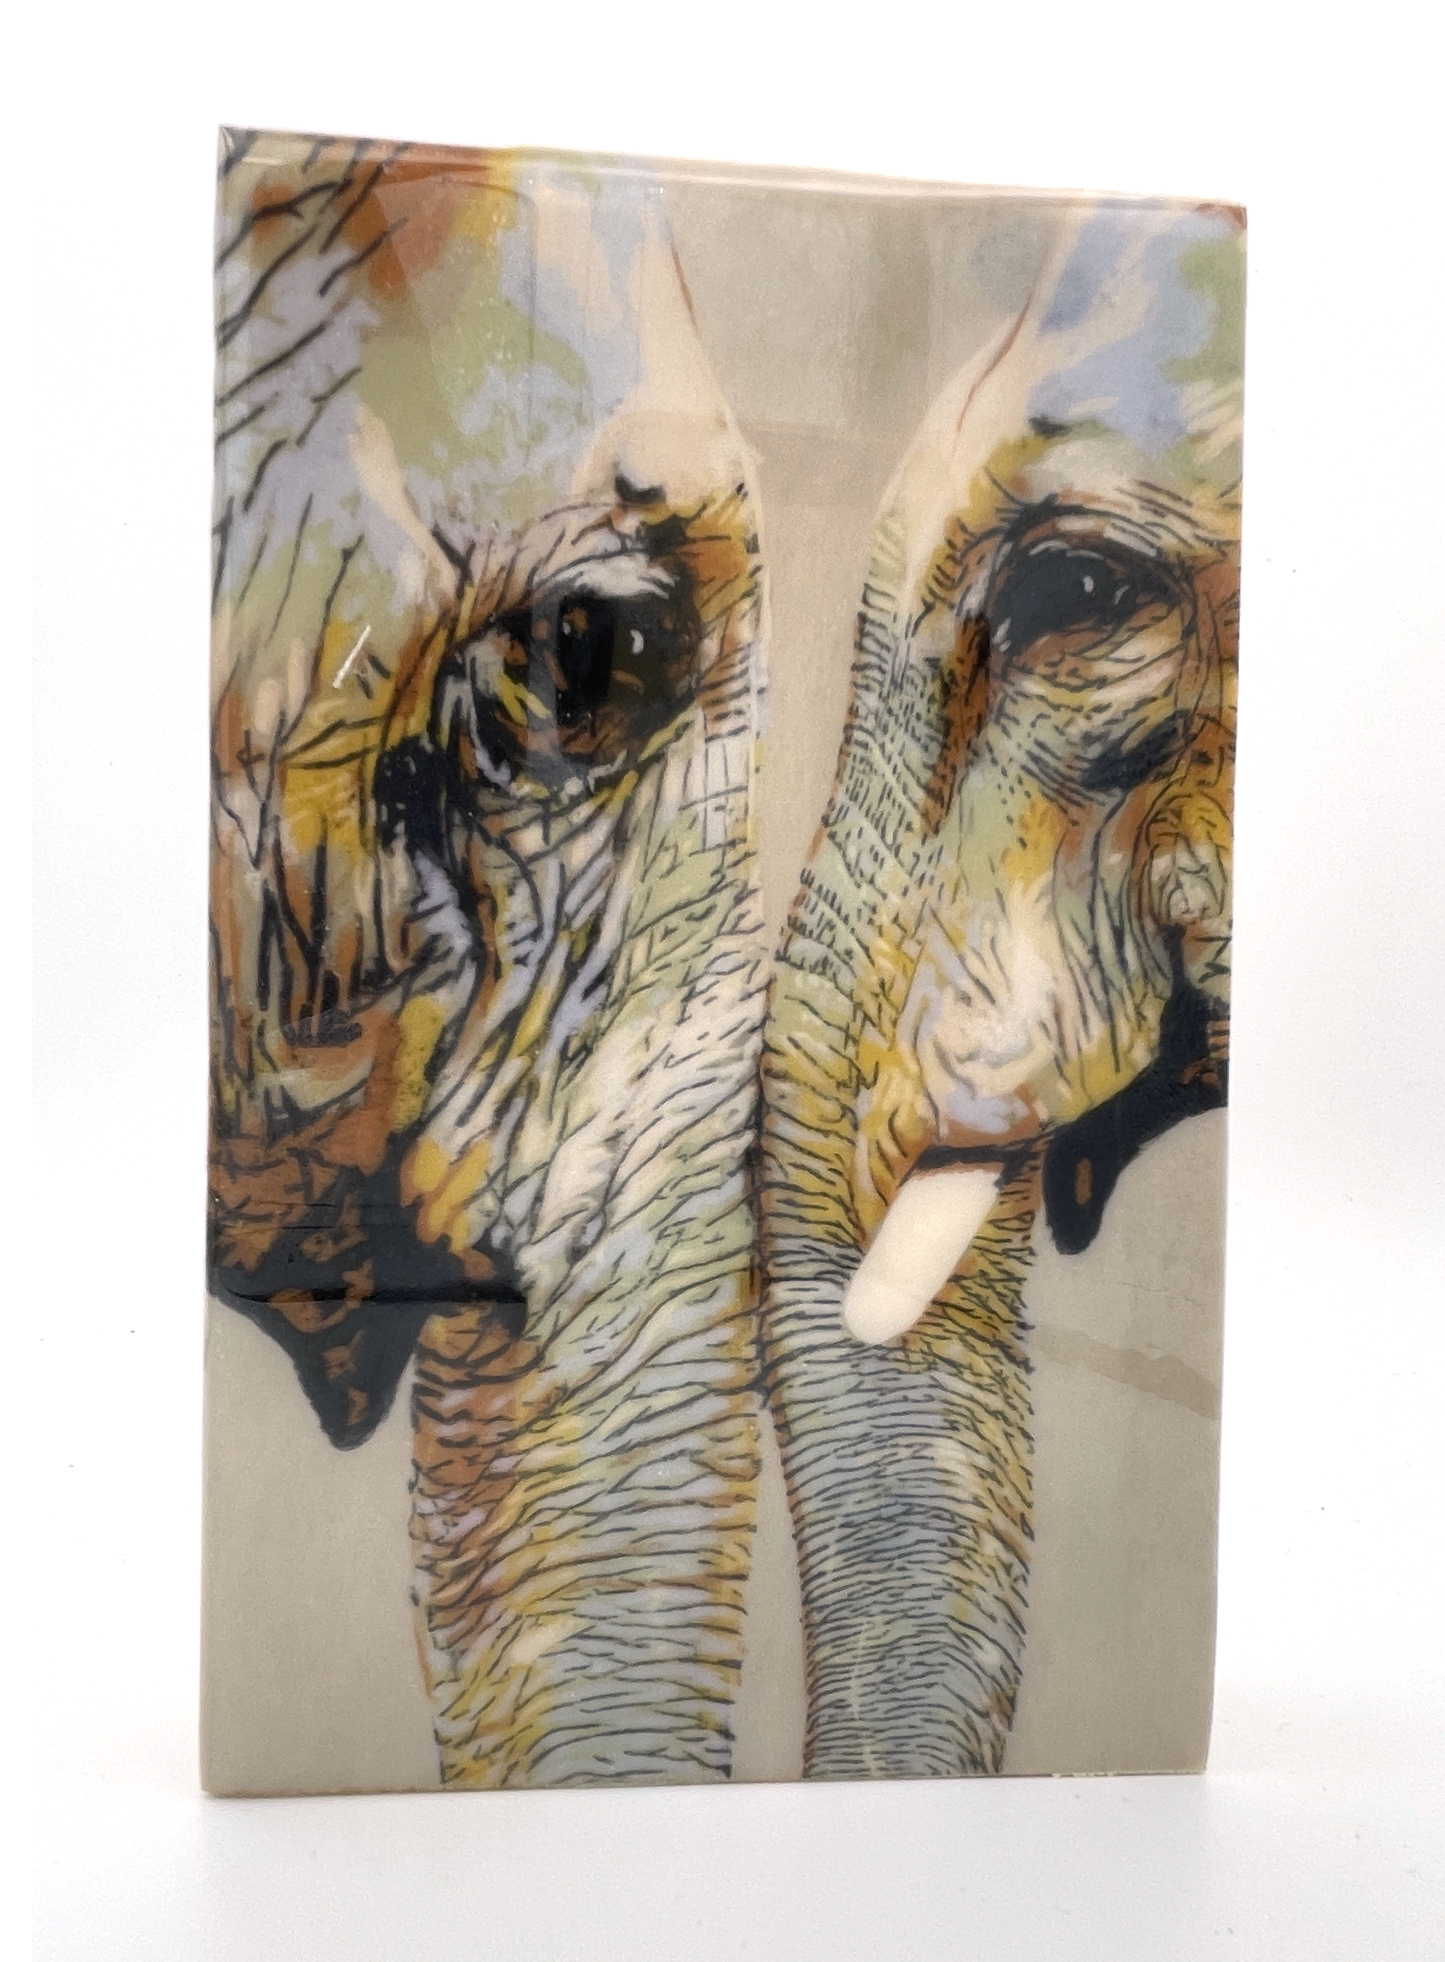 Familial Love of Elephants Wood Tile